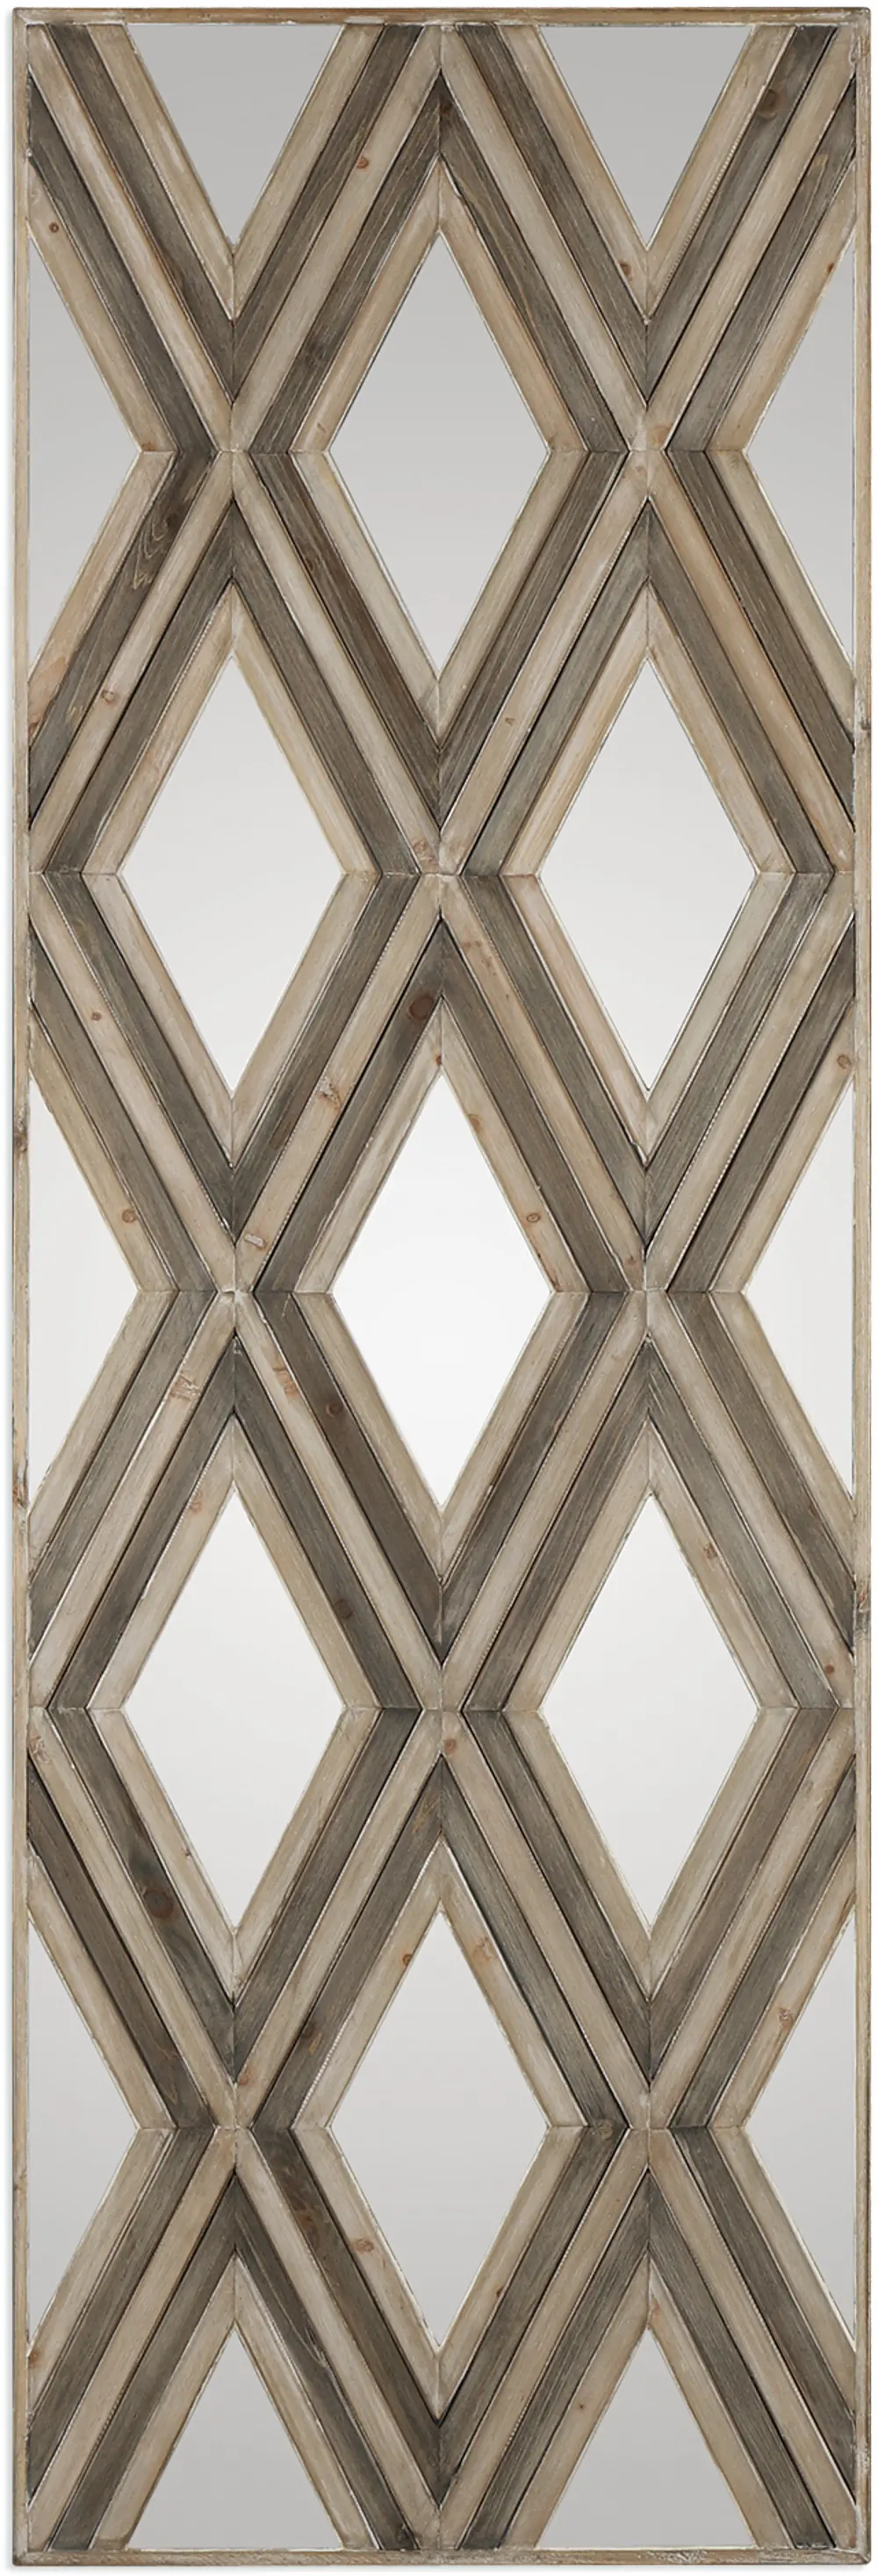 Ivory and Chestnut Gray Geometric Argyle Mirror-1